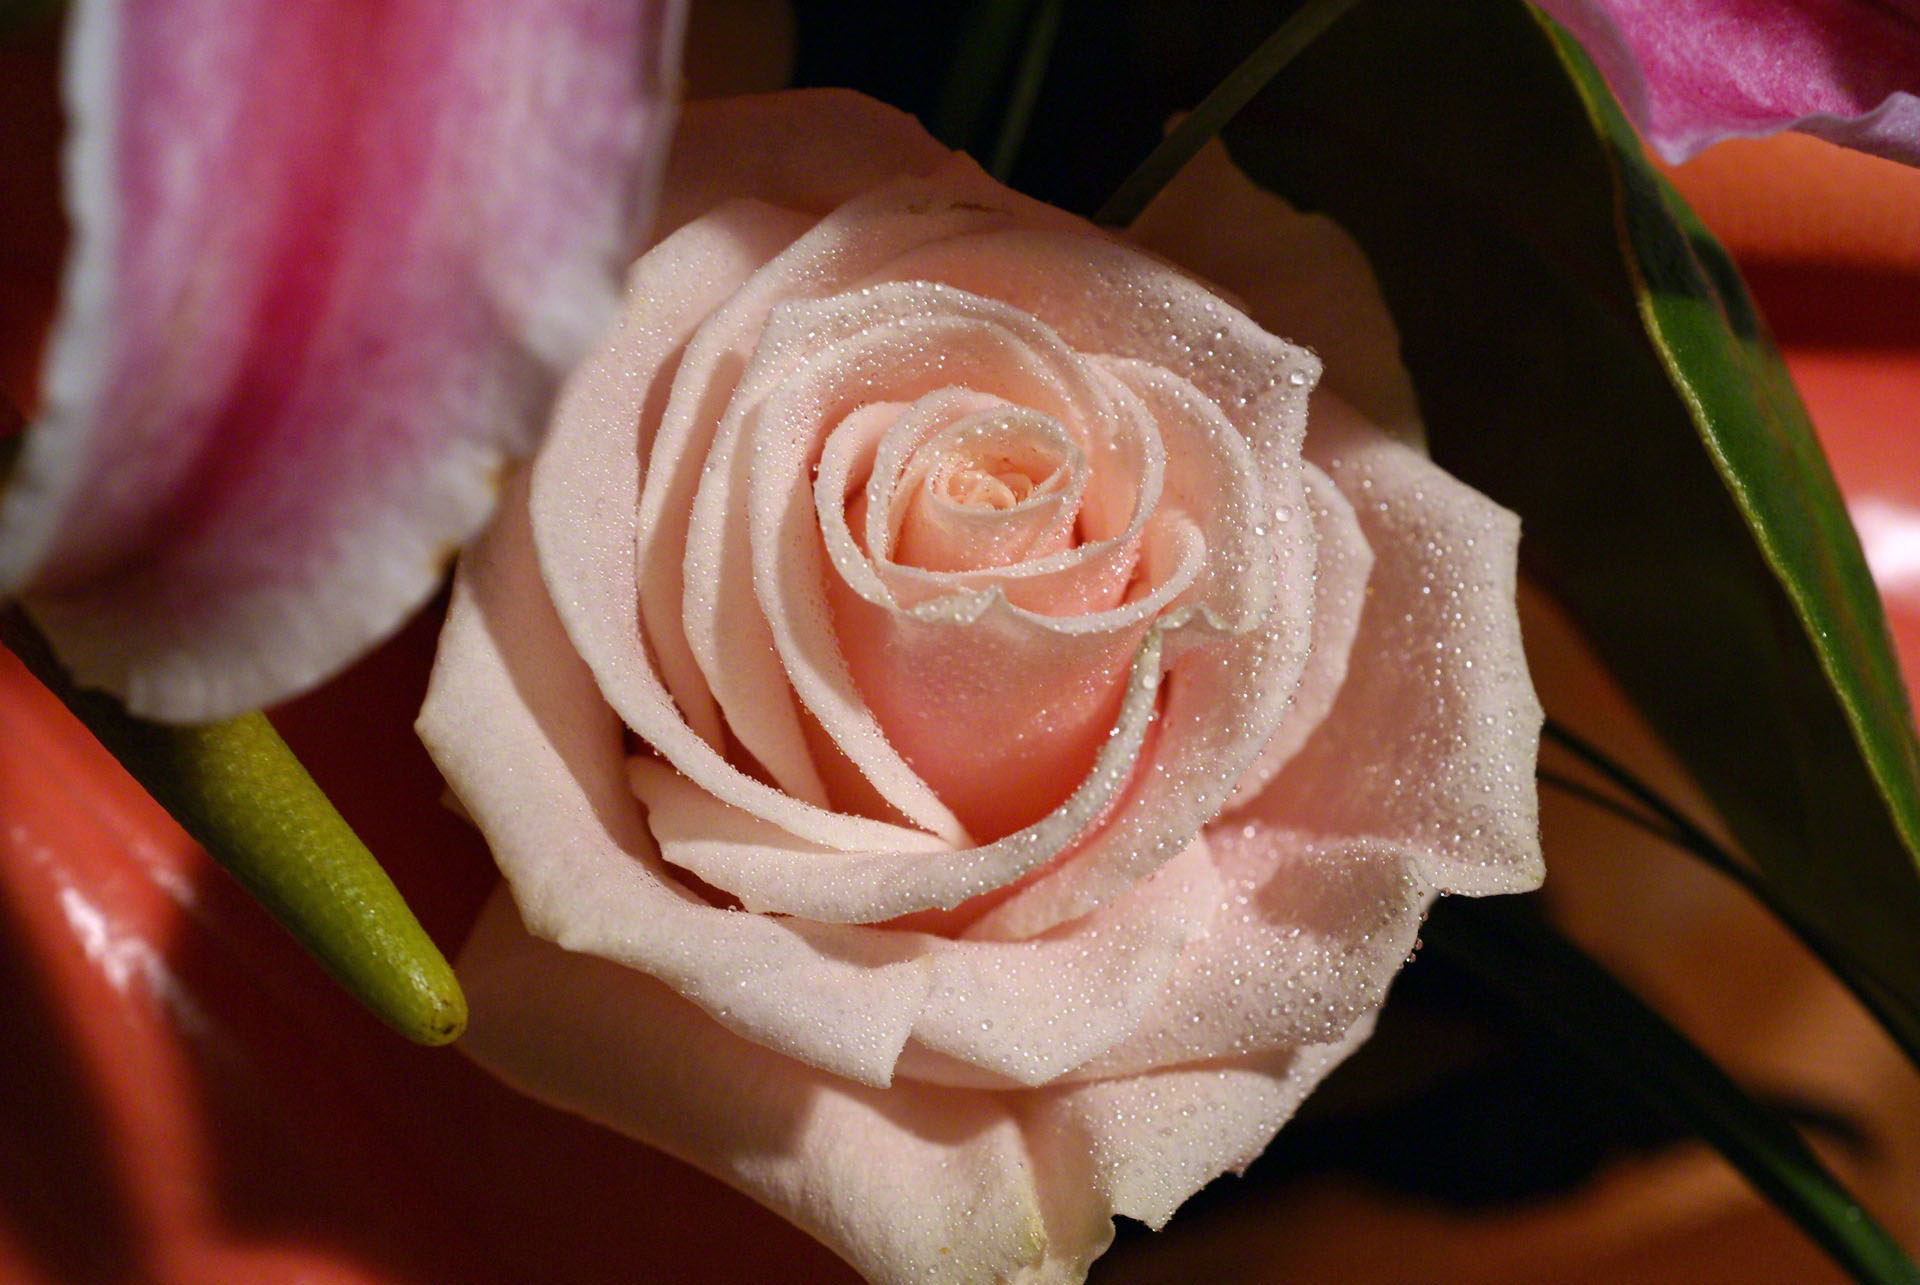 Peach Rose macro